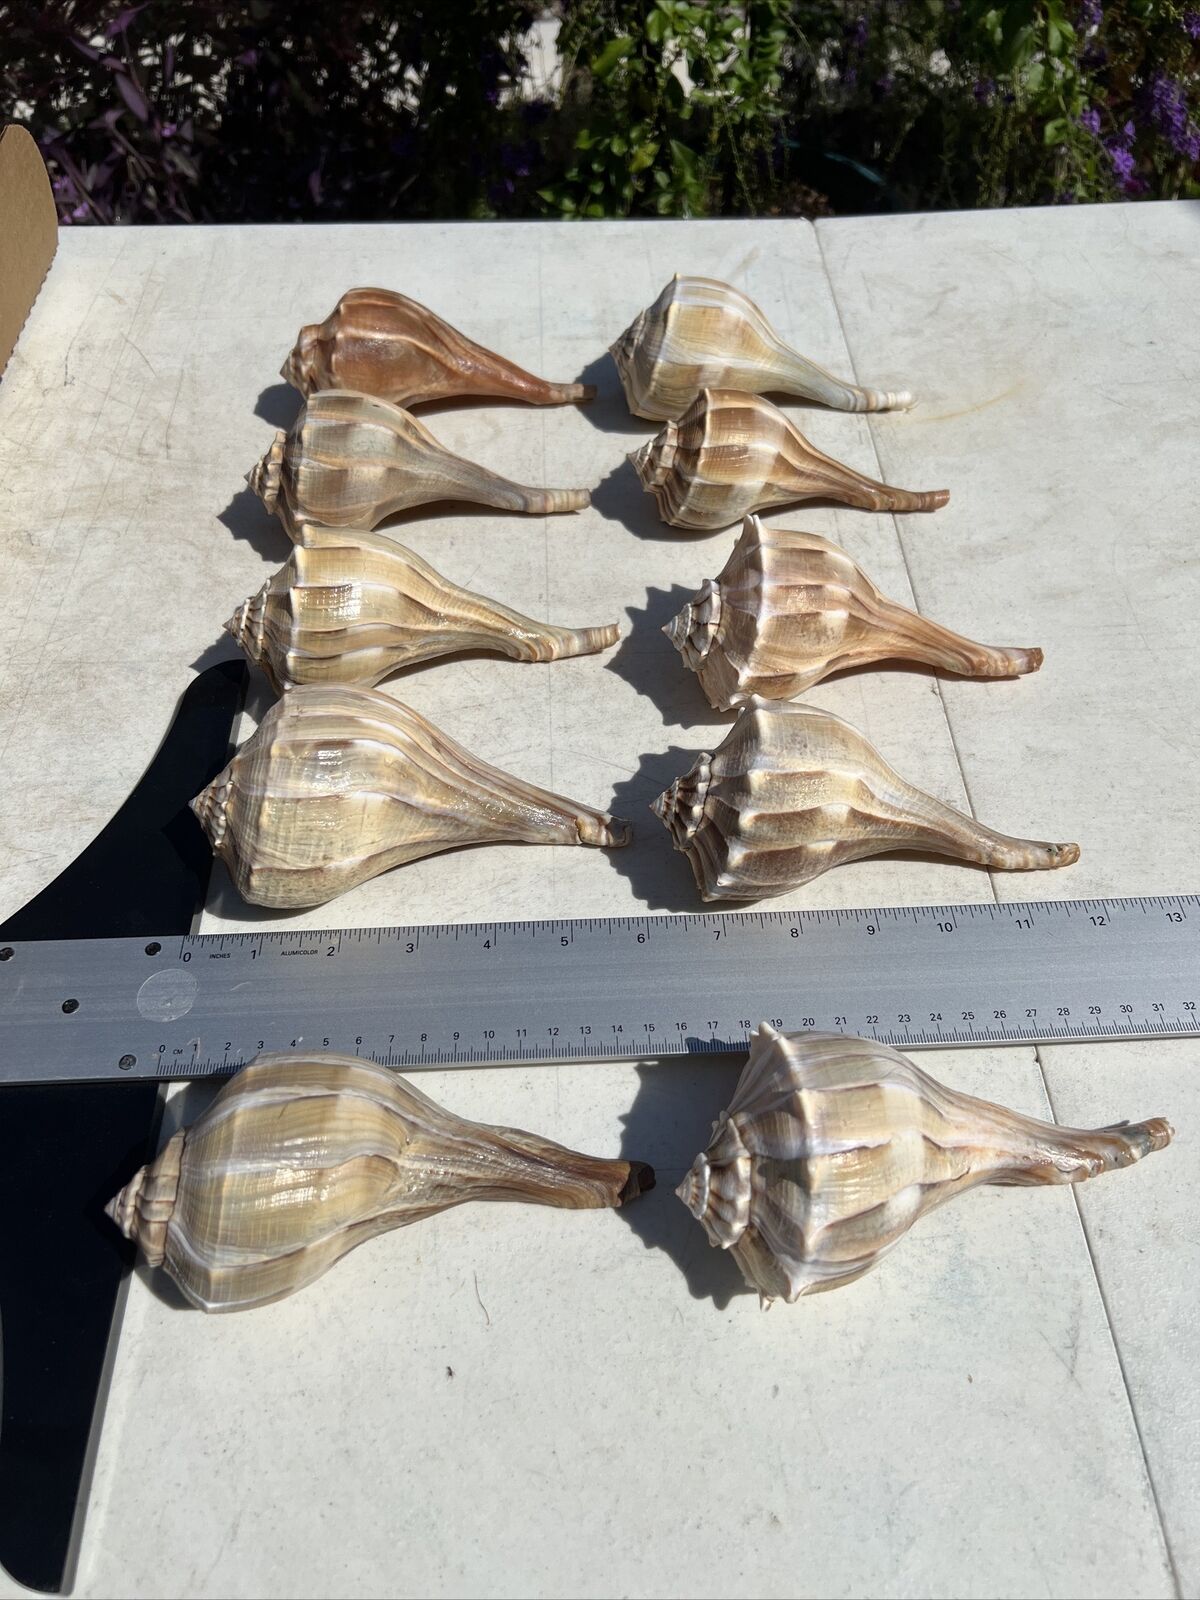 6'' Large Lightning Whelks - Conch - Shell lot of 10 - Beach Centerpiece Wedding